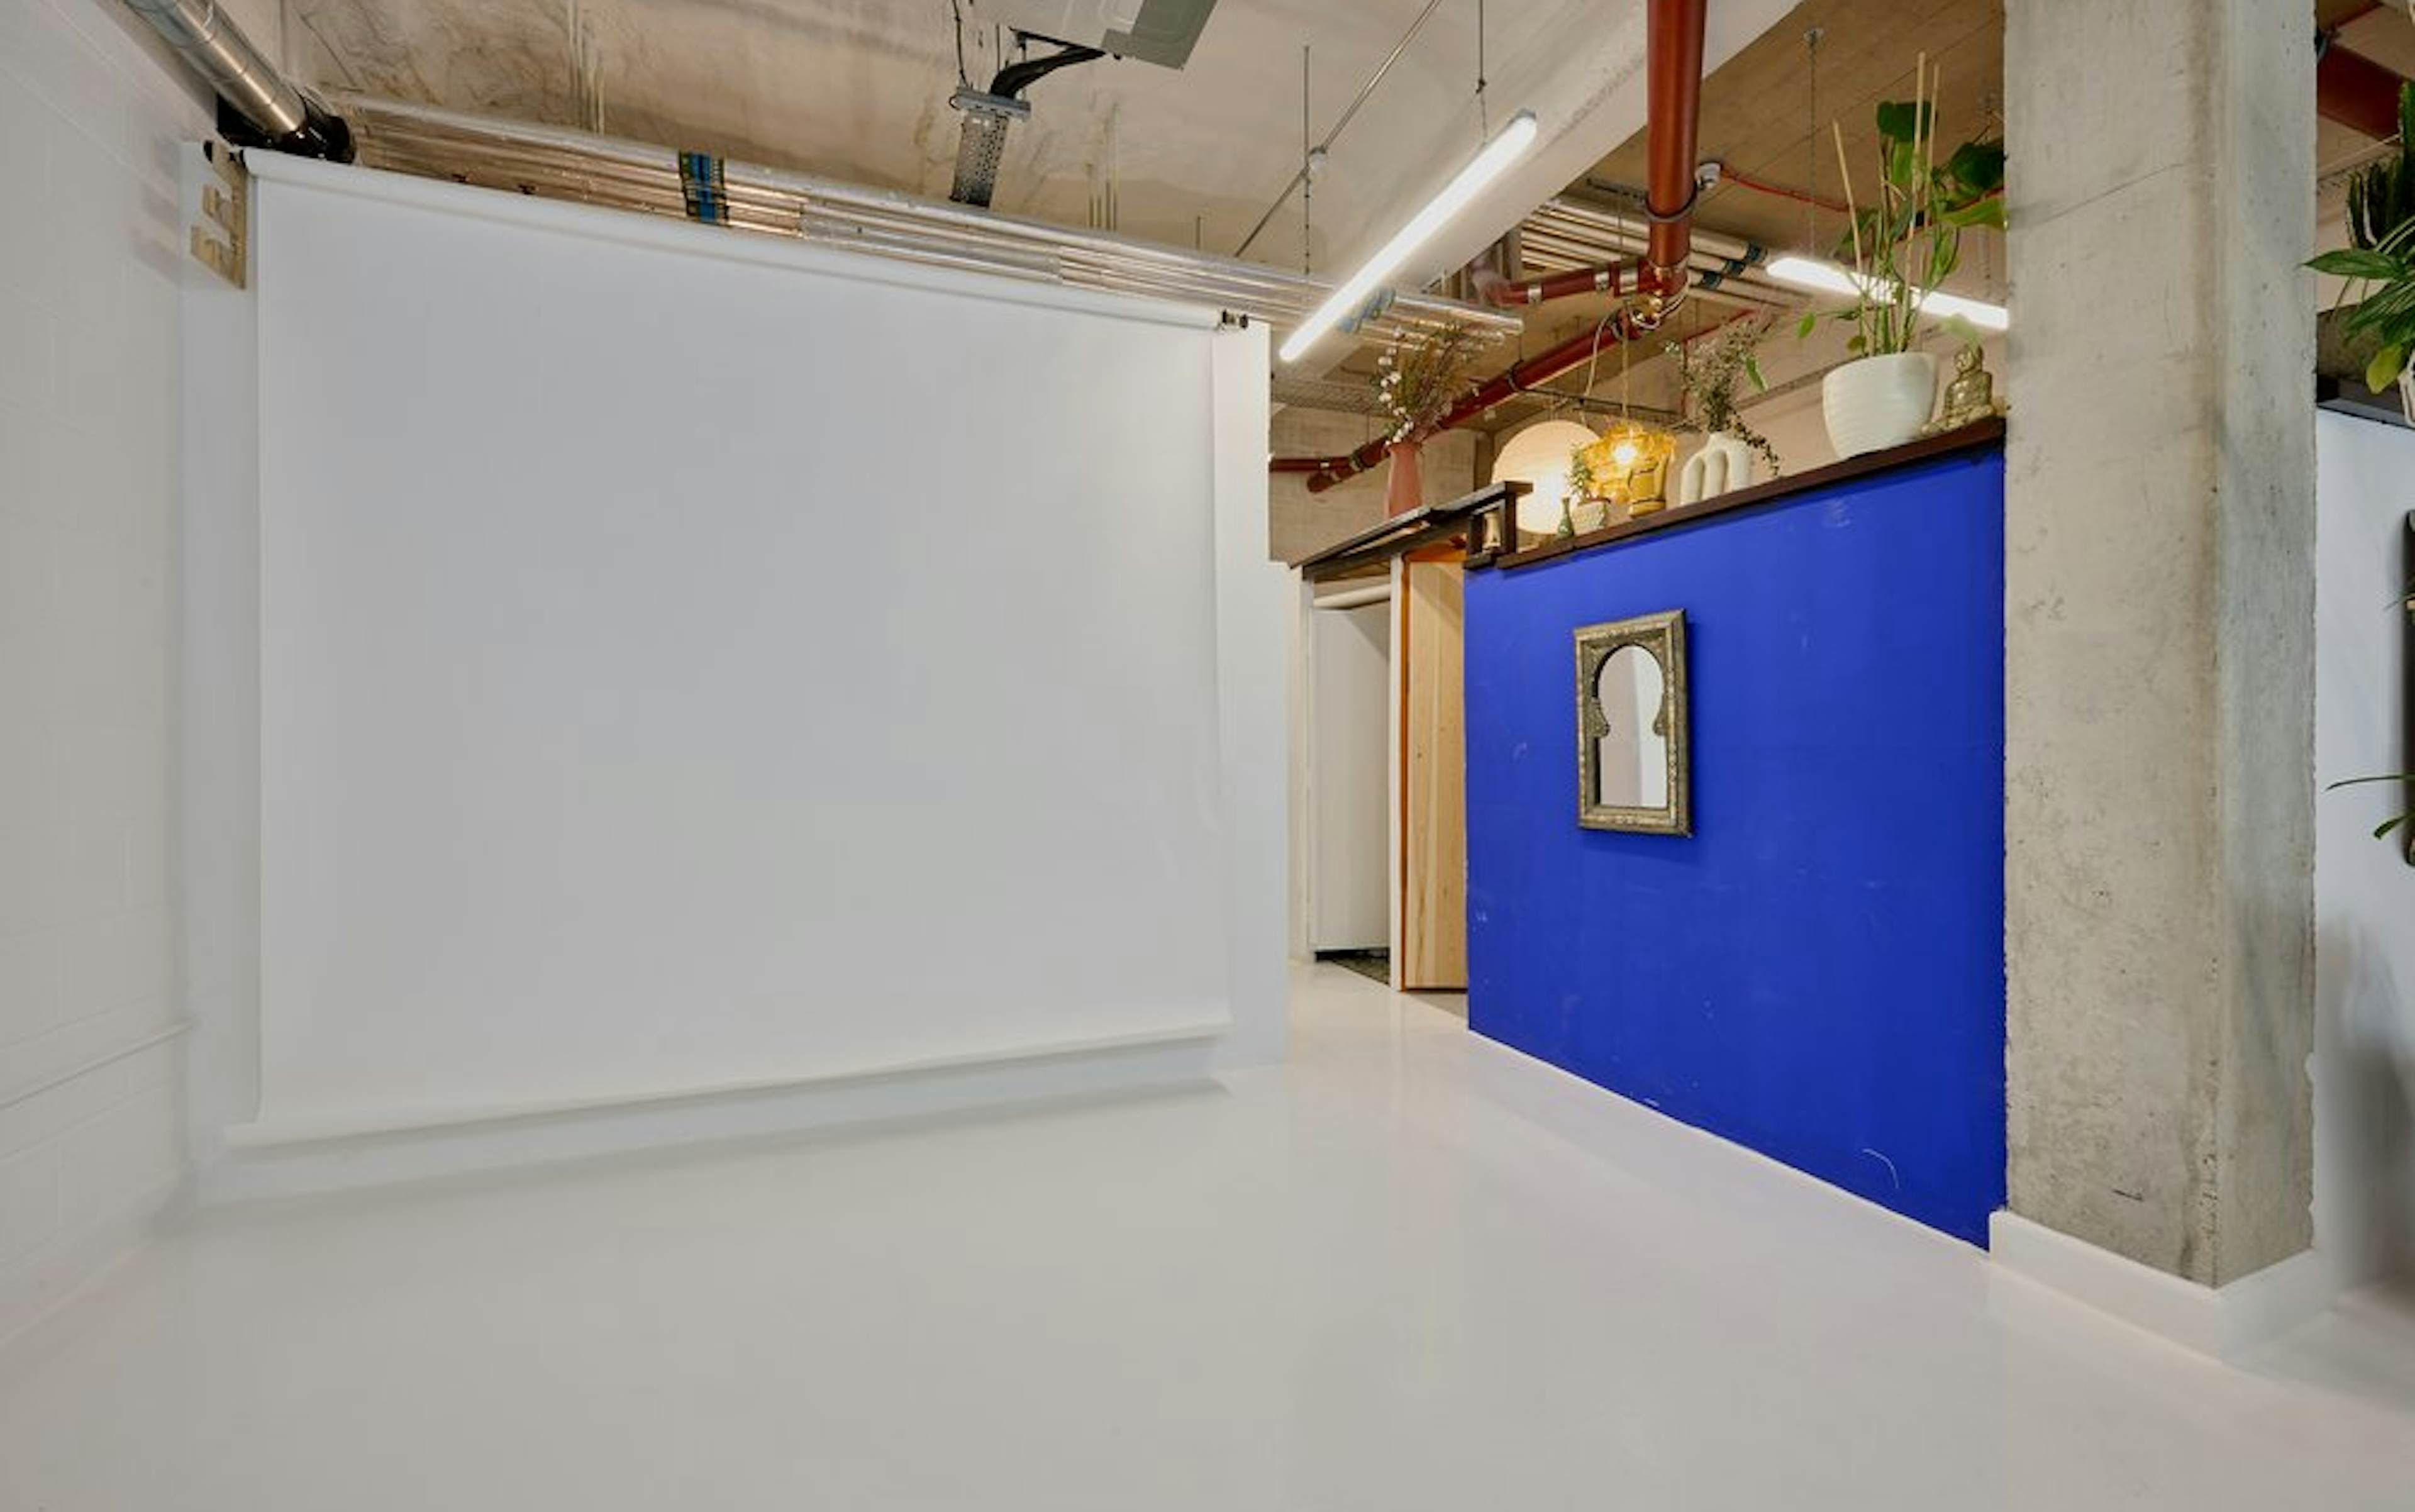 Knokno Studio & Event Space - The Studio image 1